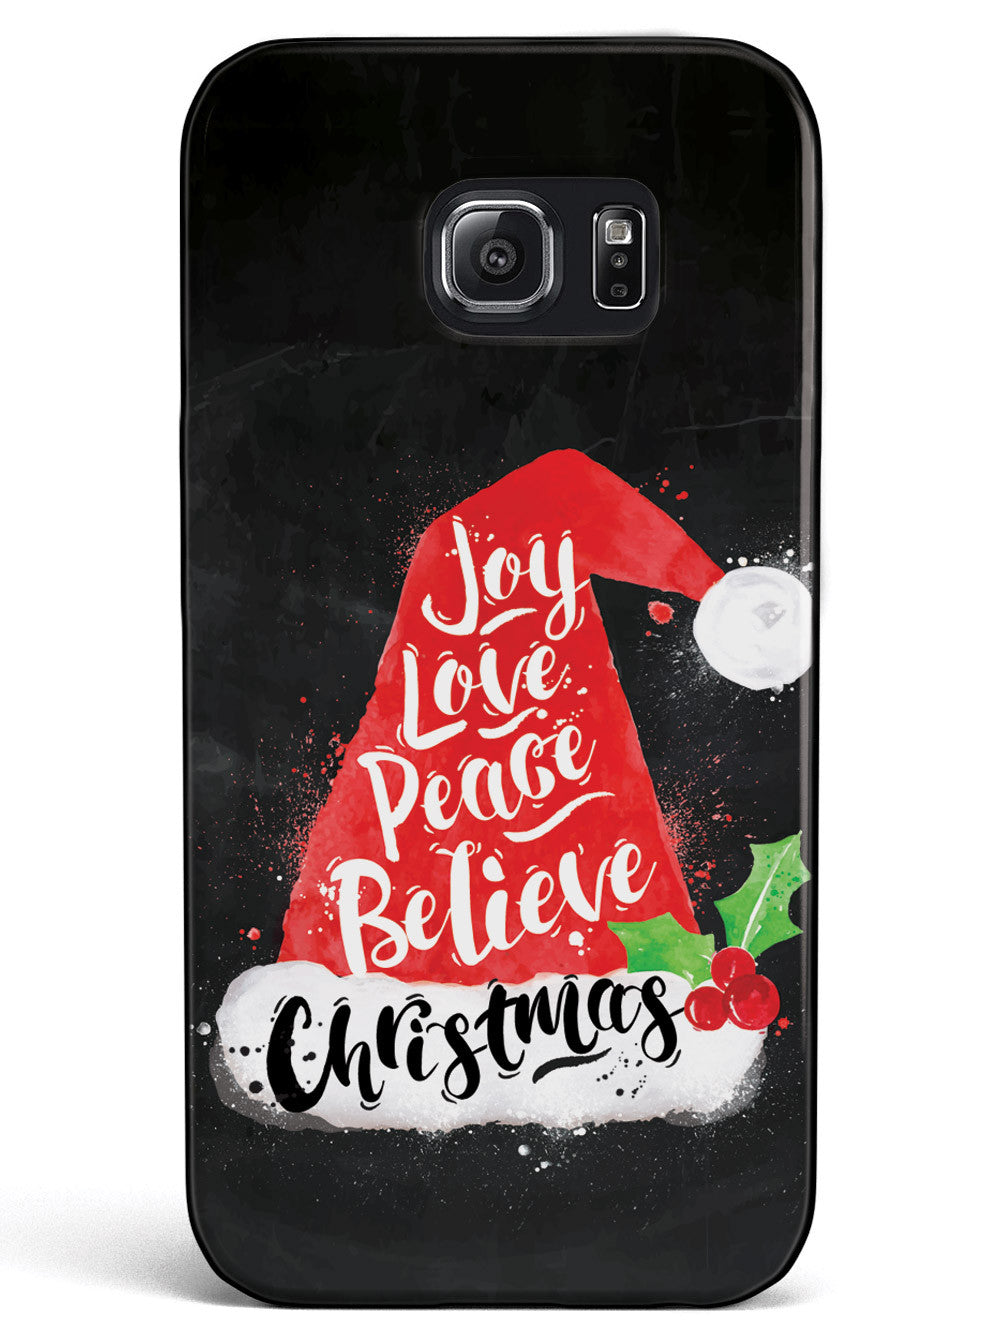 Joy, Love, Peace, Believe - Christmas Hat - Black Case